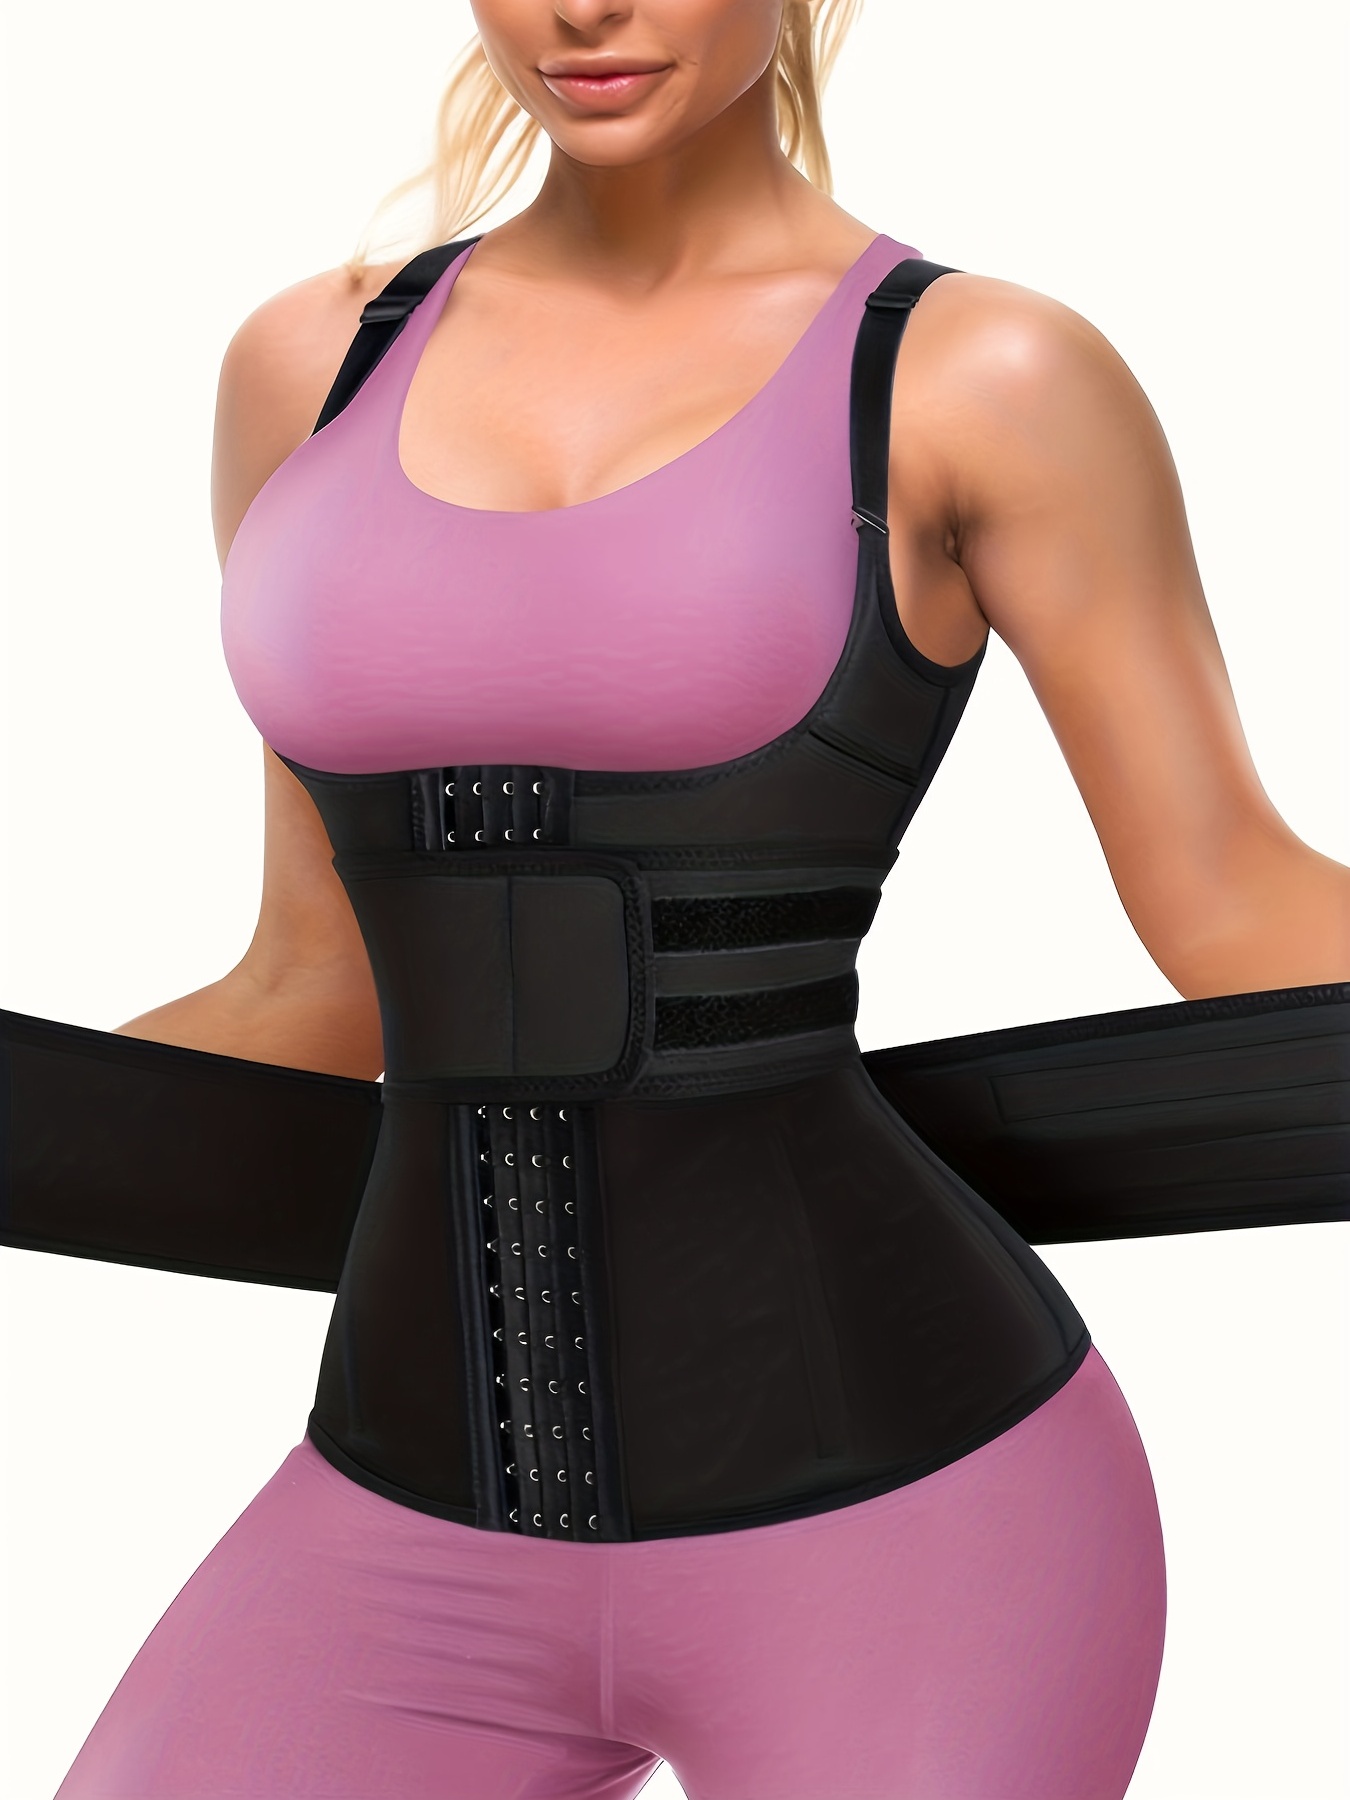 Women's Waist Trainer Latex Waist Cincher Underbust Corset Body Shaper  Tummy Control Slimming Belly Sheath Girdle Sports Belt